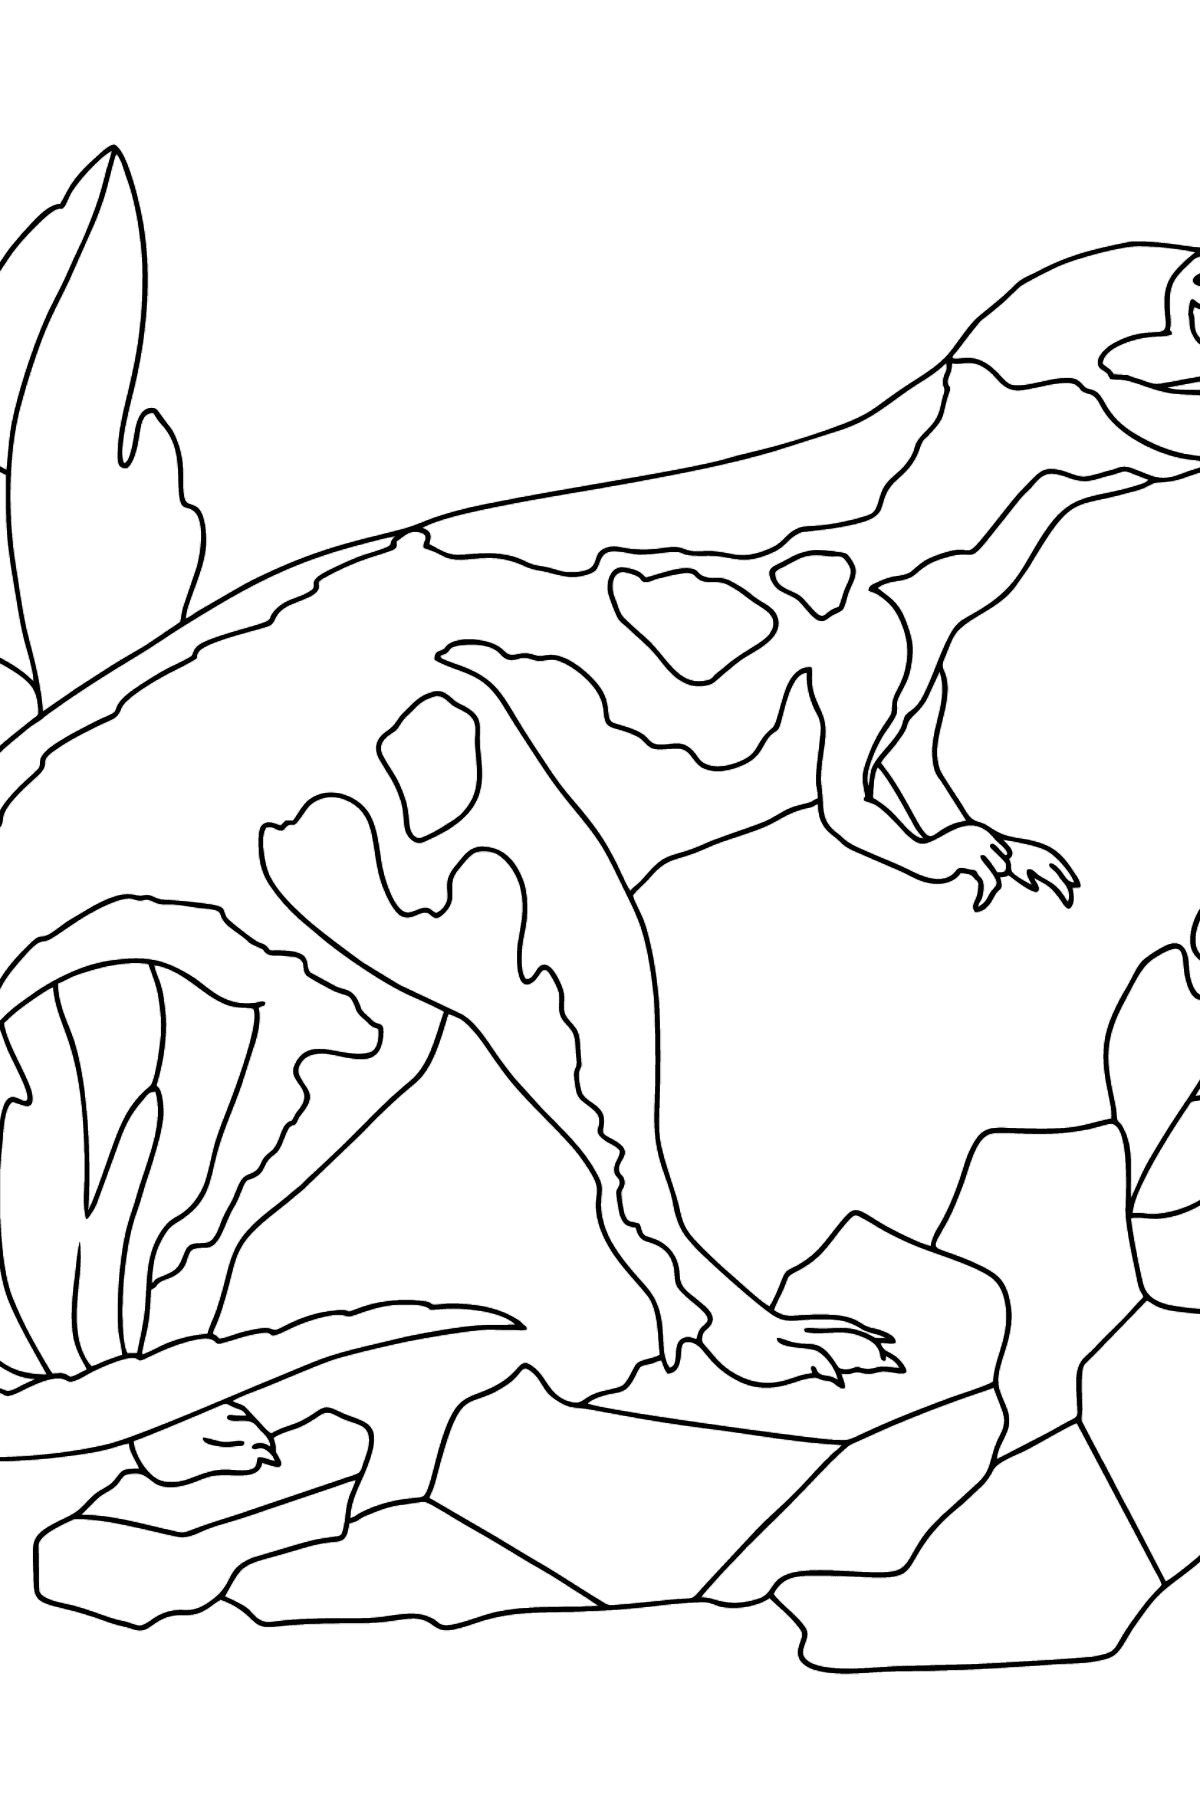 Tiranosaurio Dibujo Para Colorear (difícil) - Dibujos para Colorear para Niños